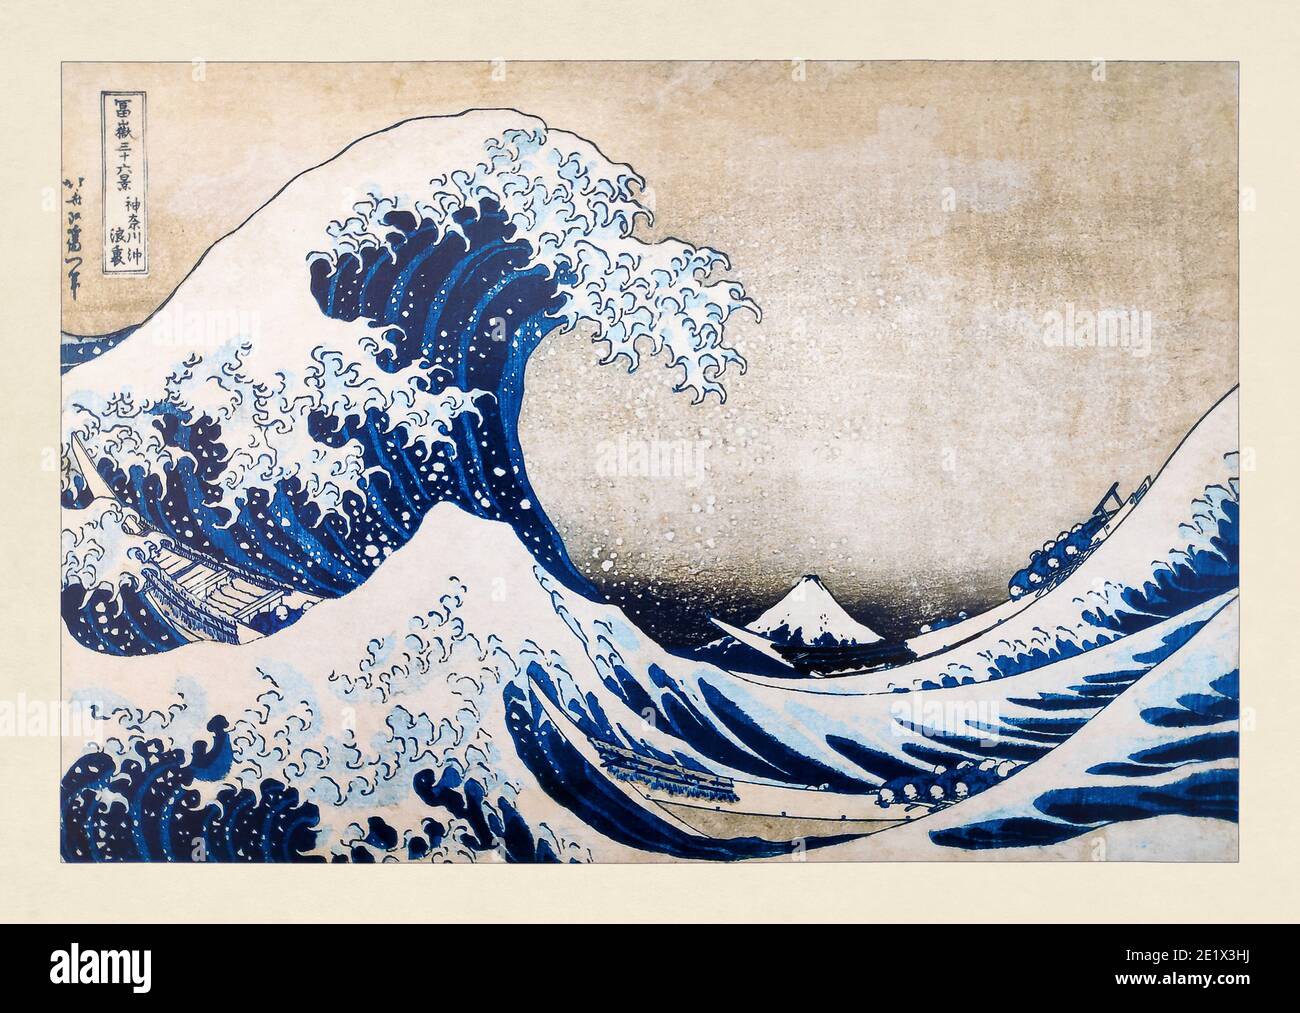 Illustration of the 'The Great Wave of Kangawa' by Katsushika Hokusai. Stock Photo